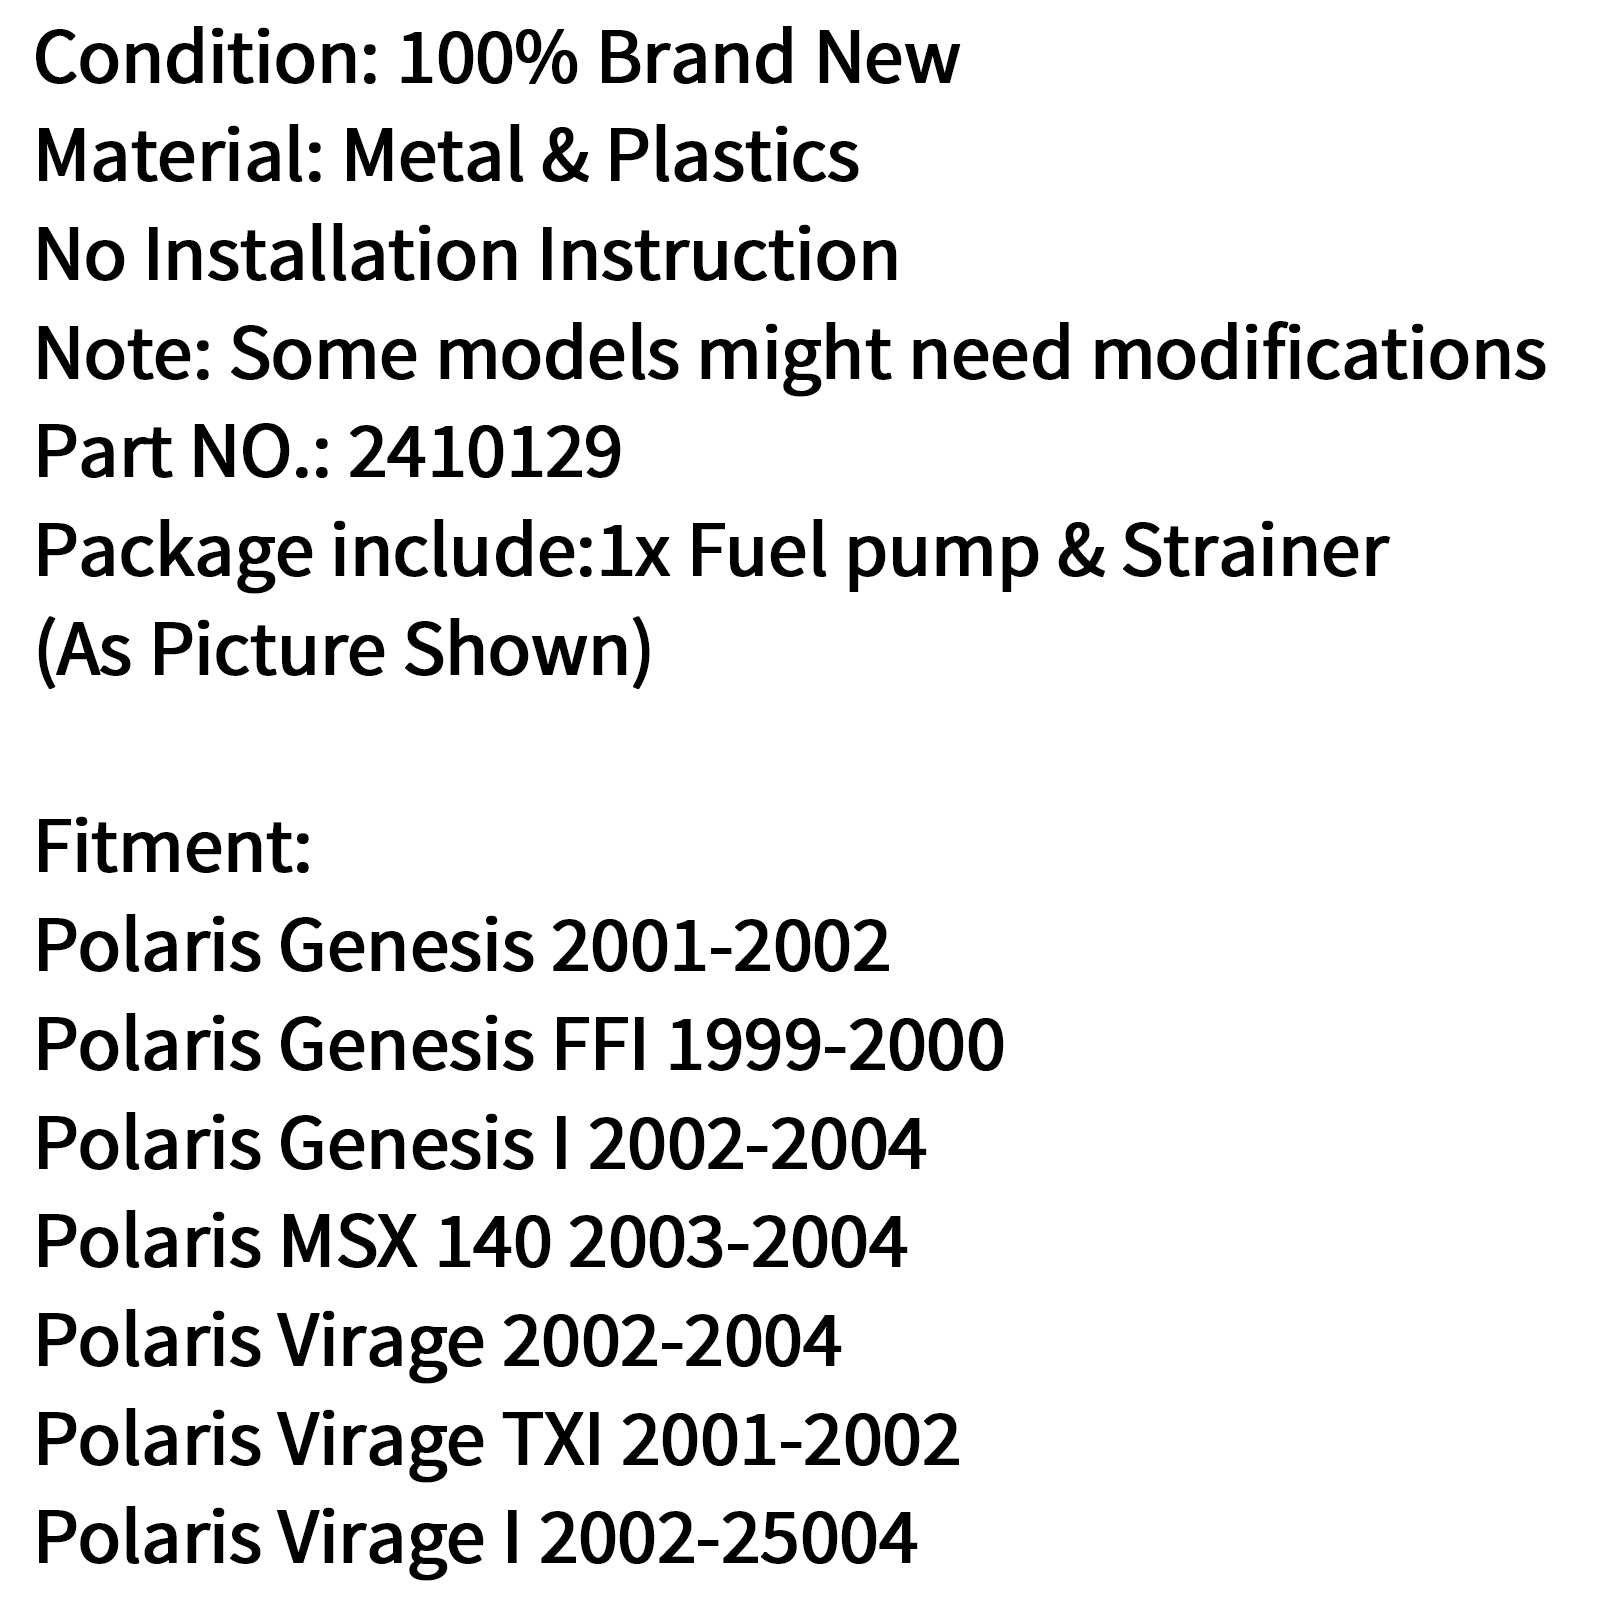 Pompa del carburante per Polaris Genesis FFI/I MSX 140 2004 Virage TXI 2001-2002